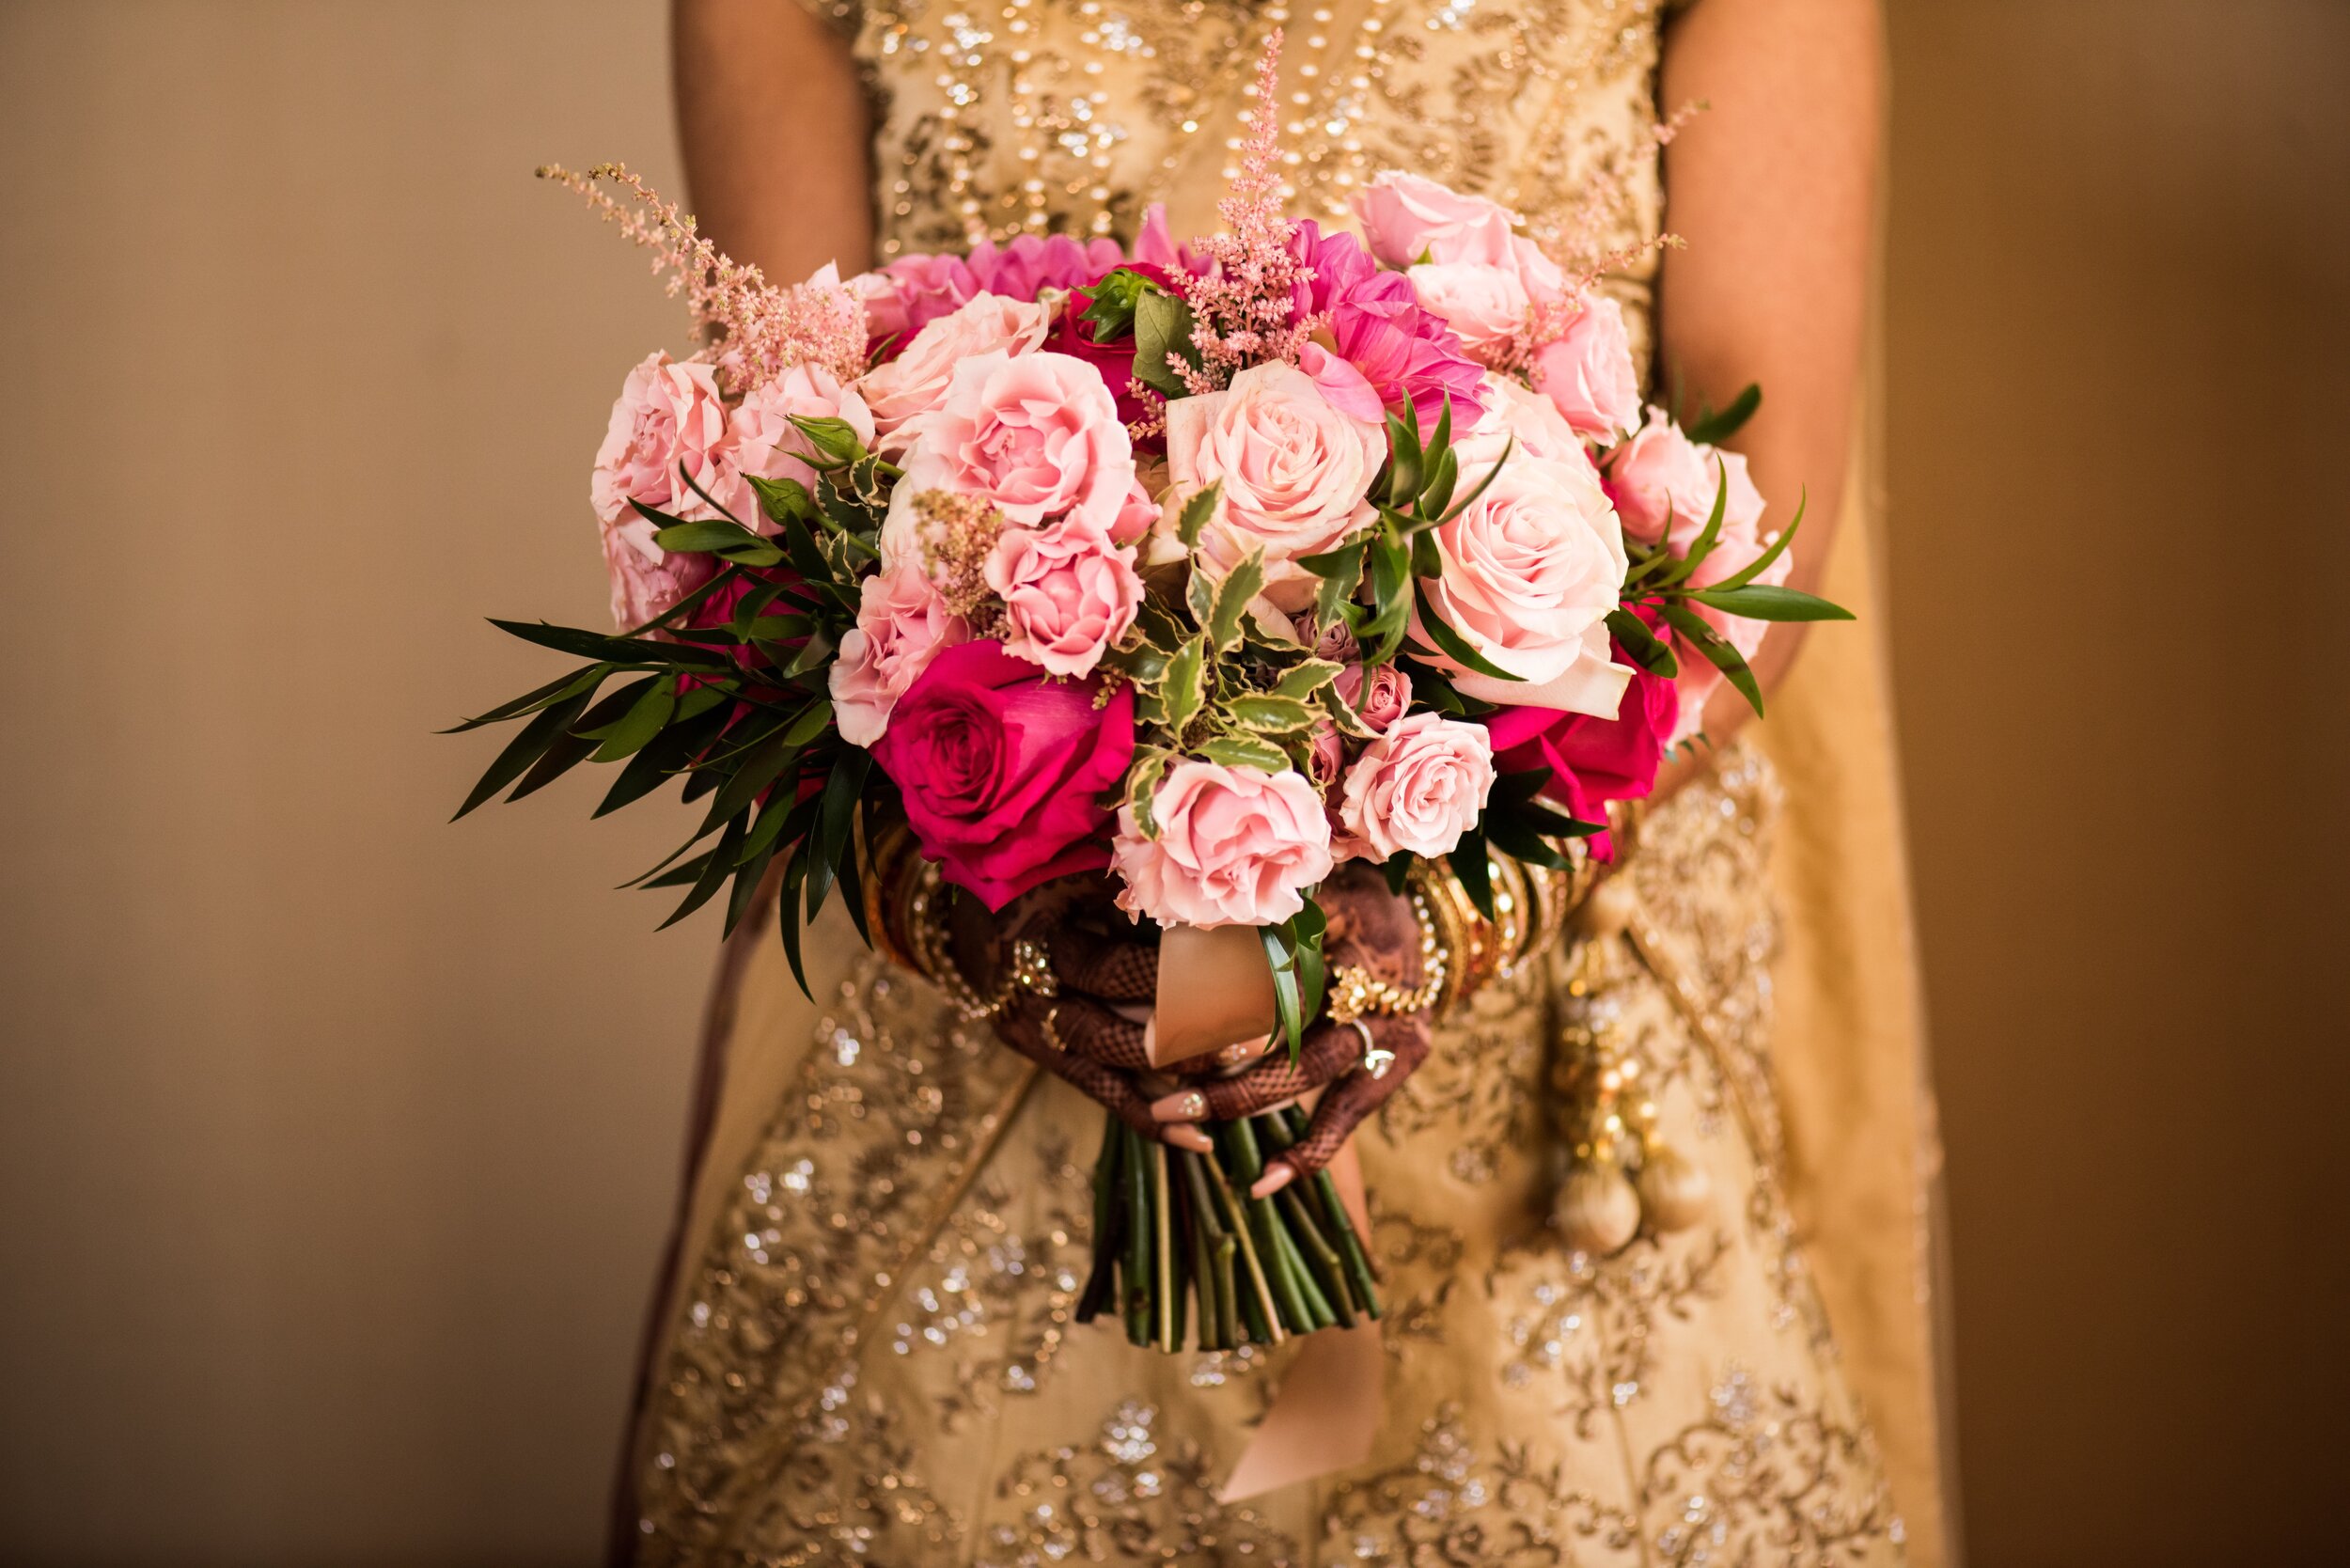 2a-mukti-and-nick-hotel-irvine-indian-wedding-dpark-photography-three-petals-design-bridal-bouquet.jpg